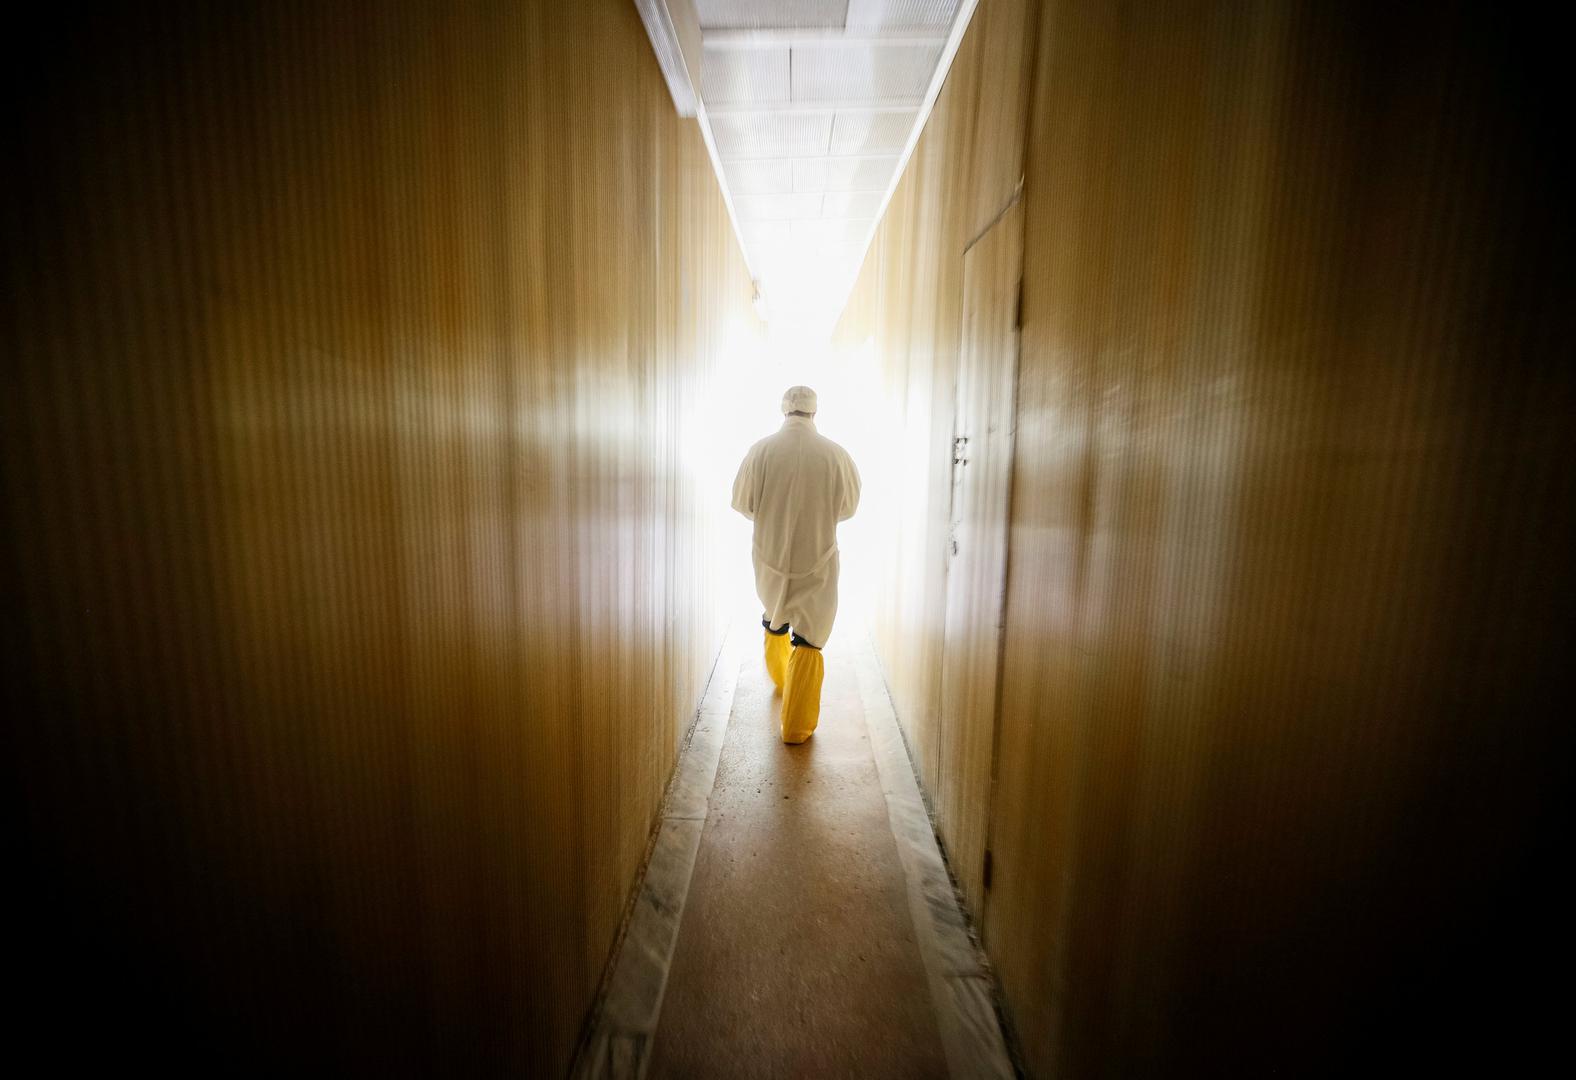 Zaposlenik nuklearne elektrane prolazi kroz hodnik zaustavljenog reaktora atomske centrale u Černobilu